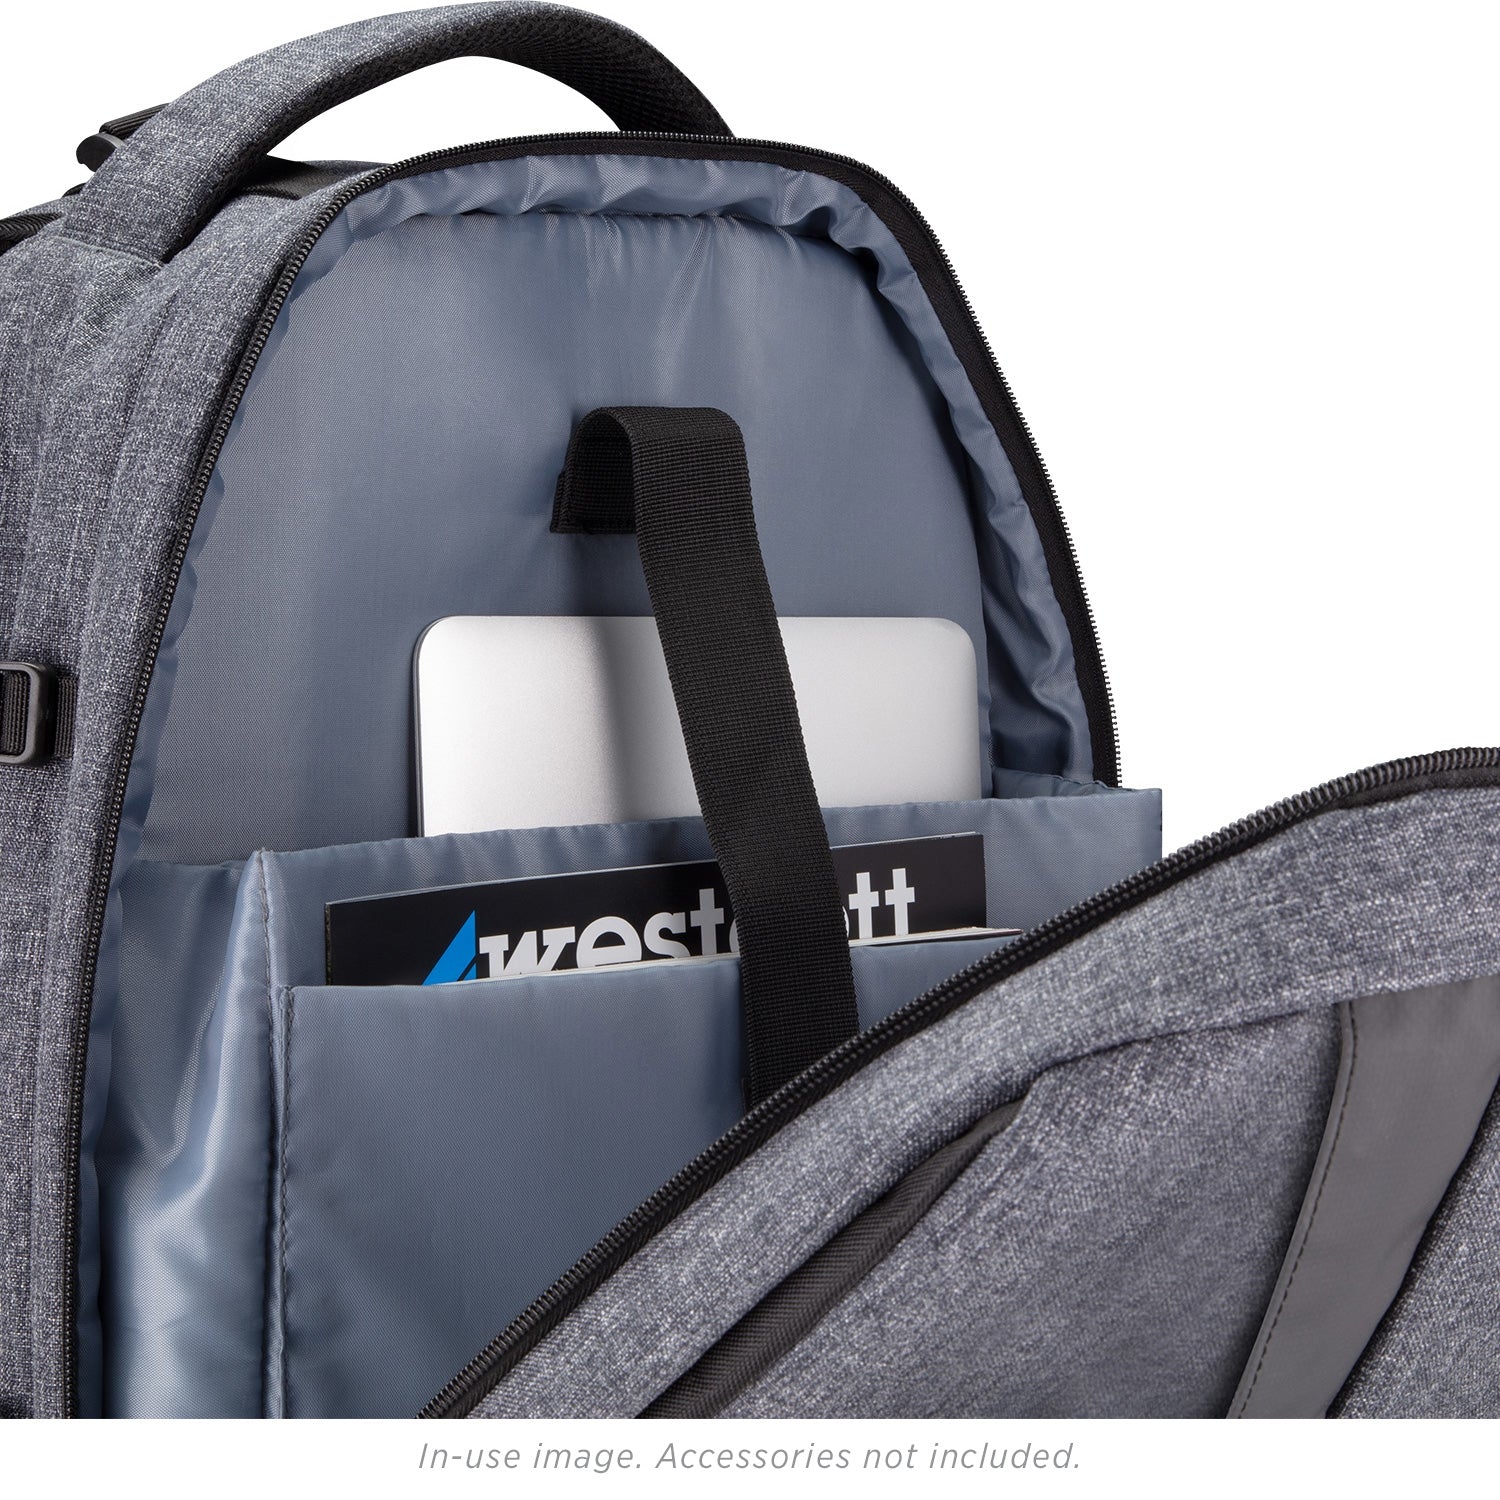 FJ200 Strobe 3-Light Backpack Kit with FJ-X3 S Wireless Trigger for Sony Cameras